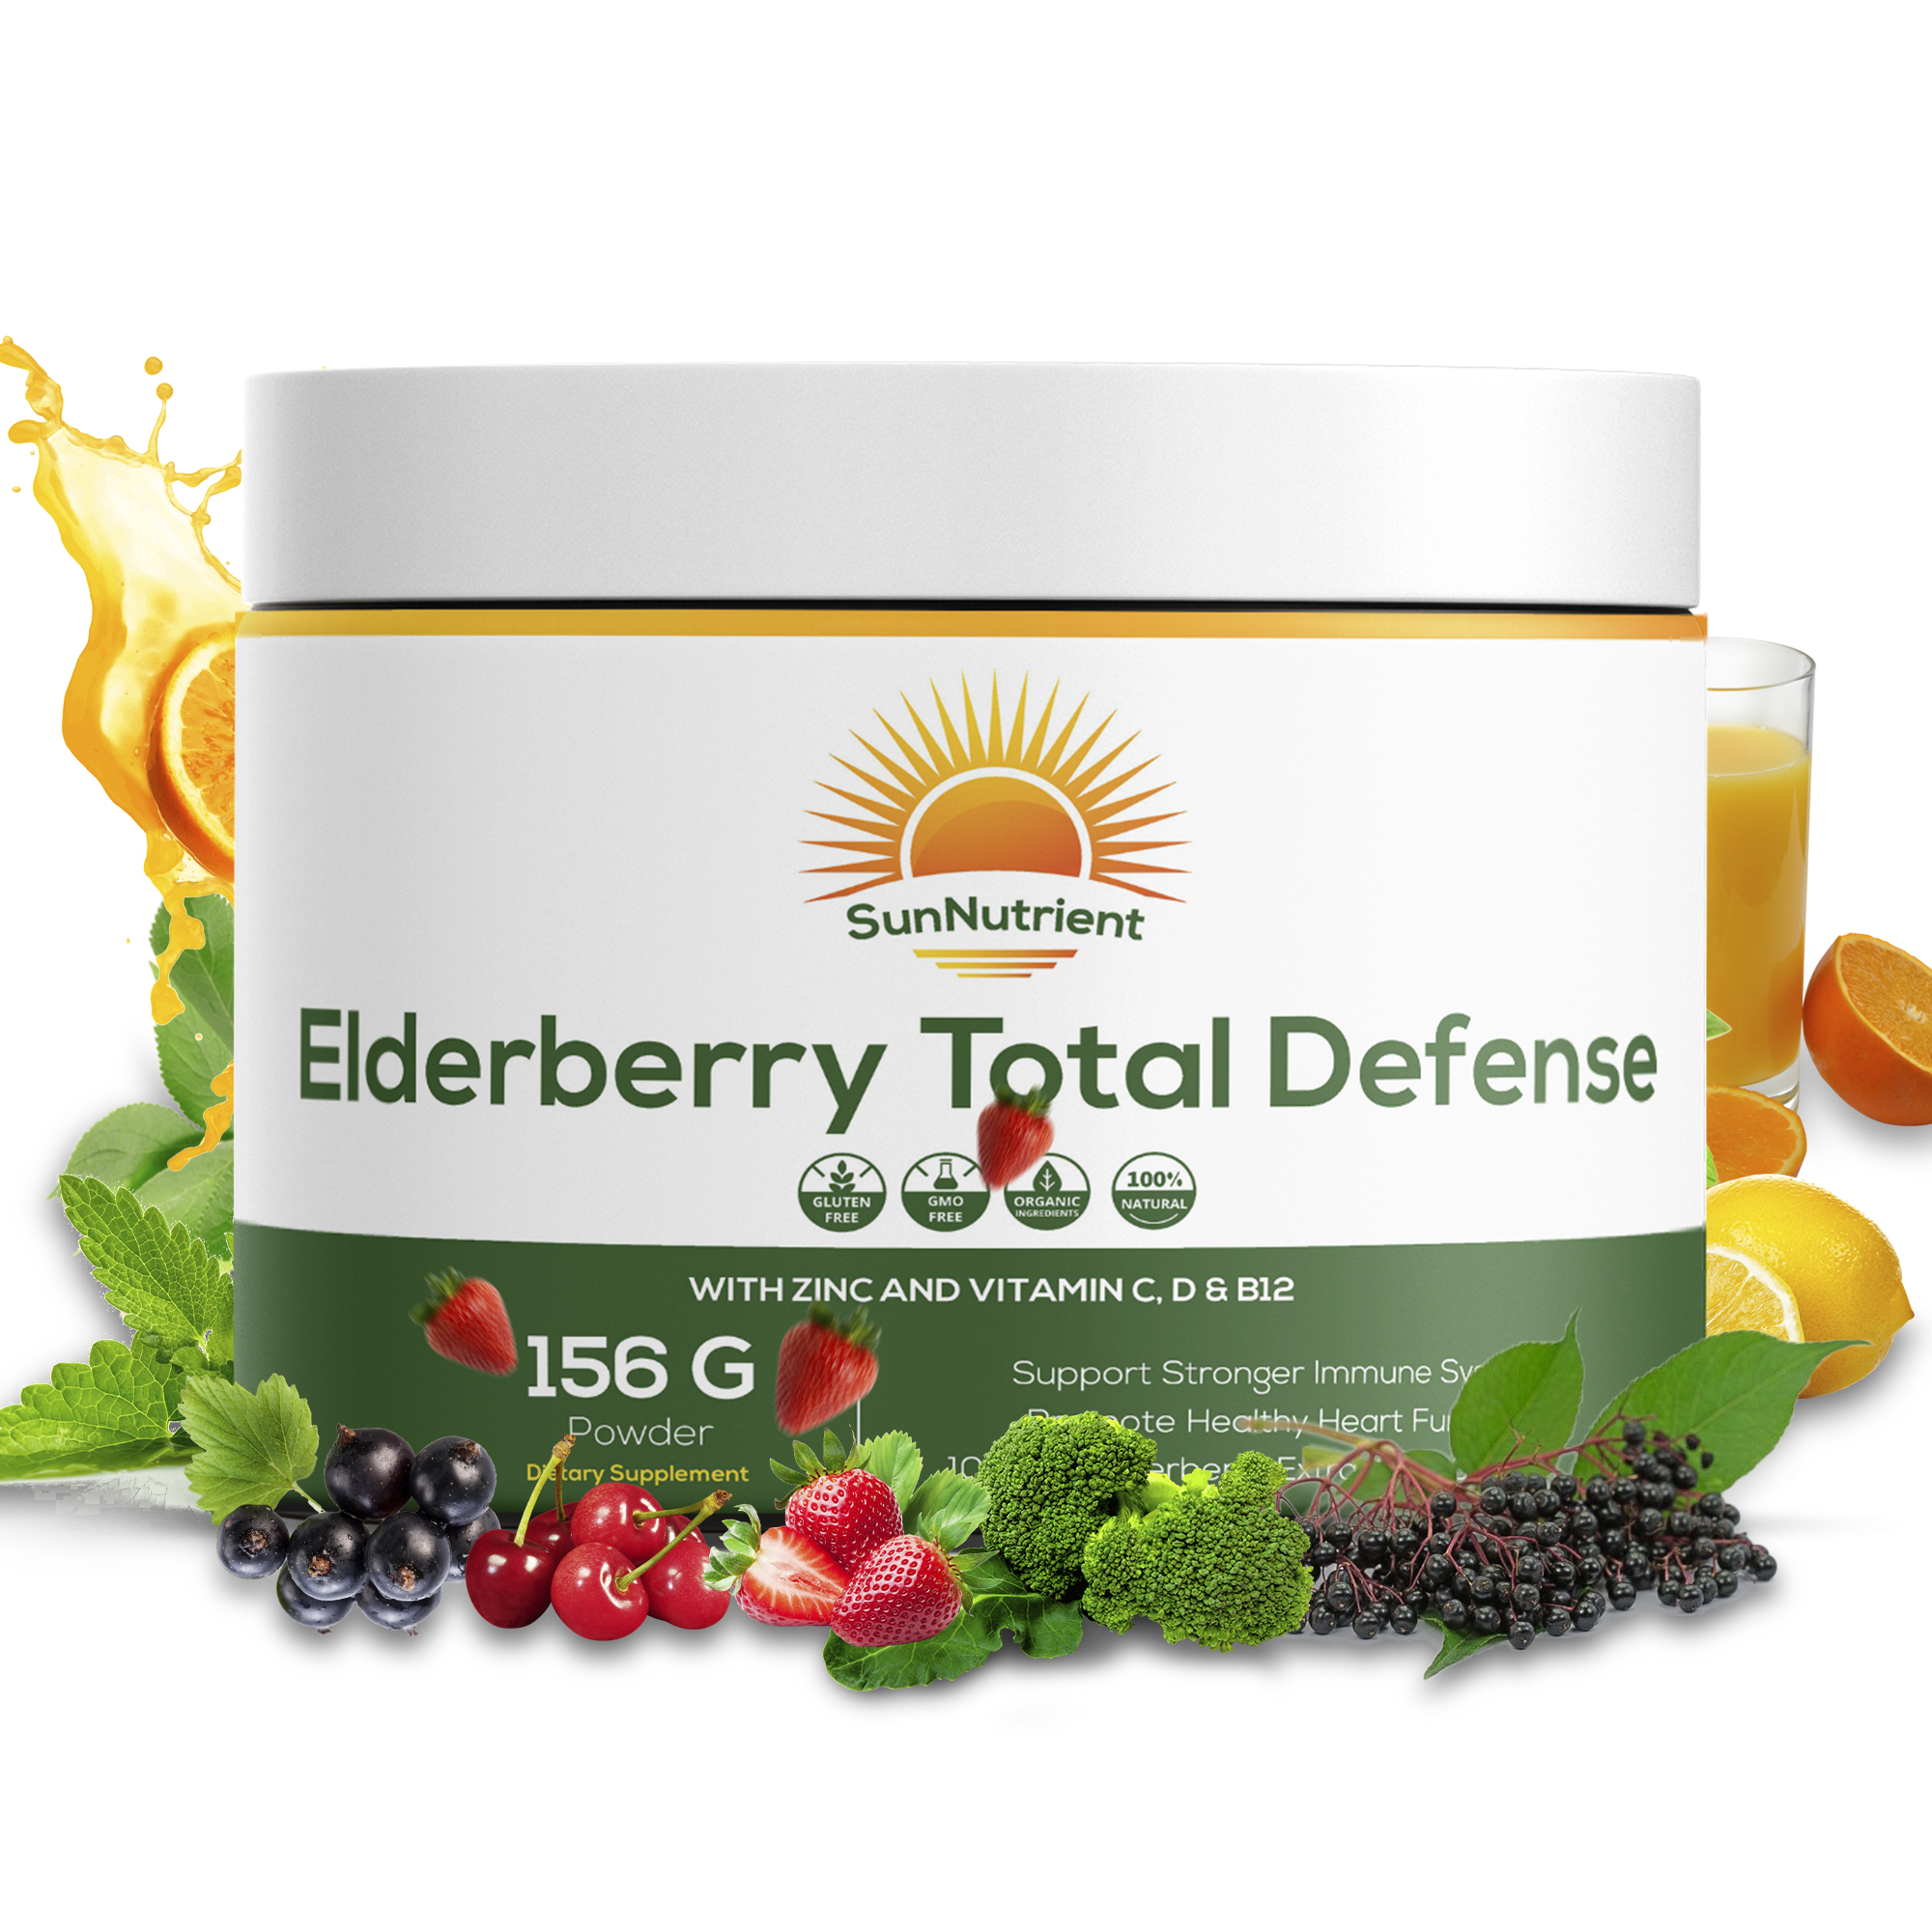 Elderberry Total Defense | Zinc & Vitamin C | 156g Powder